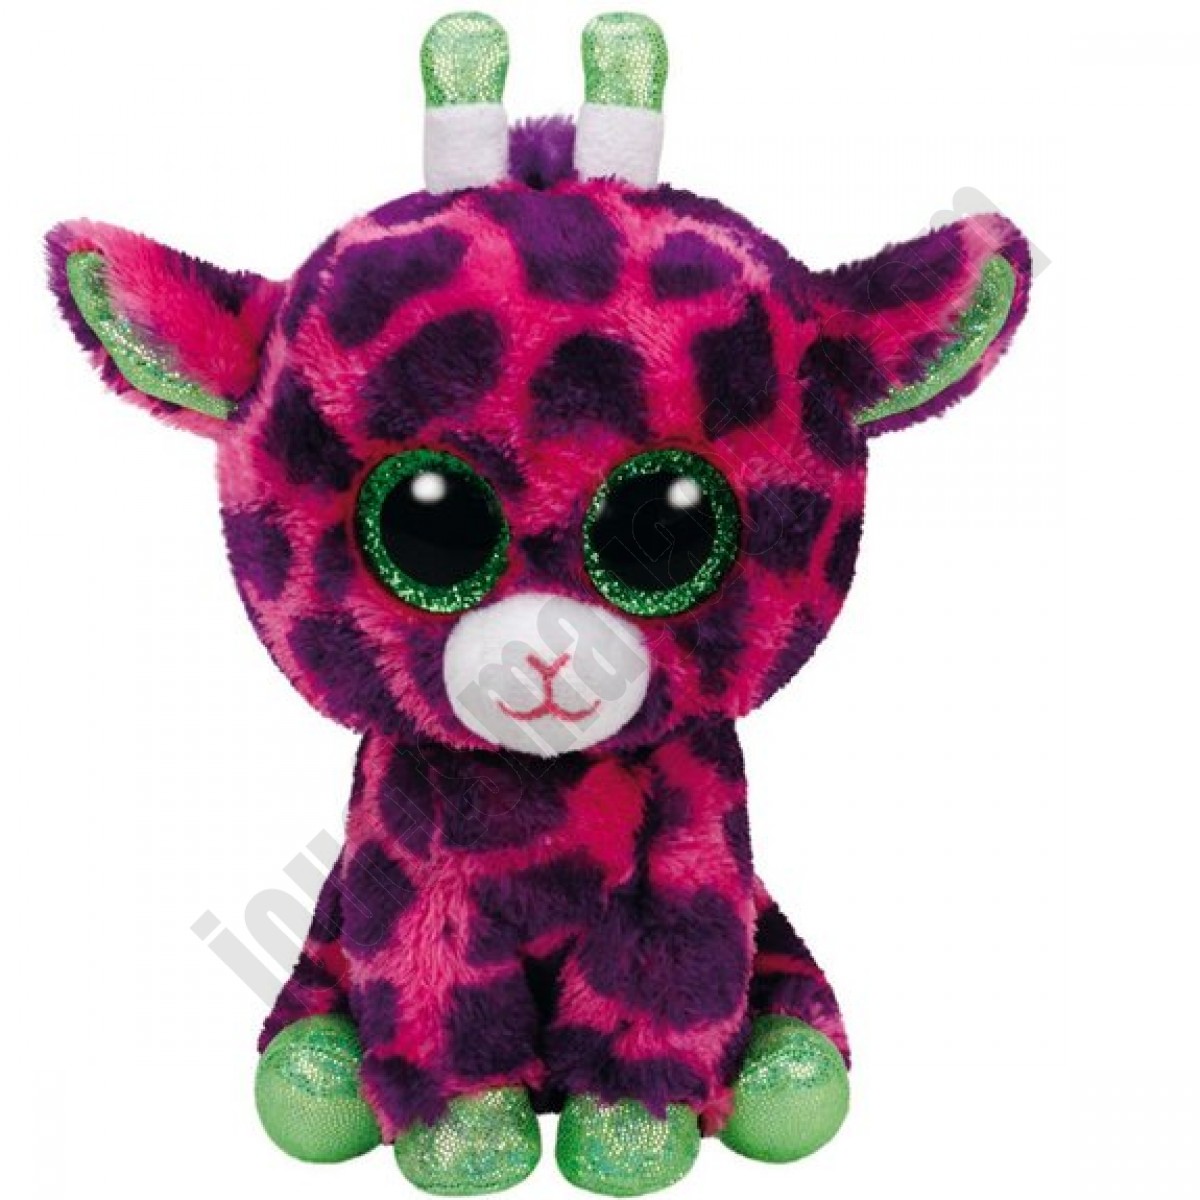 Beanie Boo's - Peluche Gilbert La Girafe 15 cm ◆◆◆ Nouveau - Beanie Boo's - Peluche Gilbert La Girafe 15 cm ◆◆◆ Nouveau